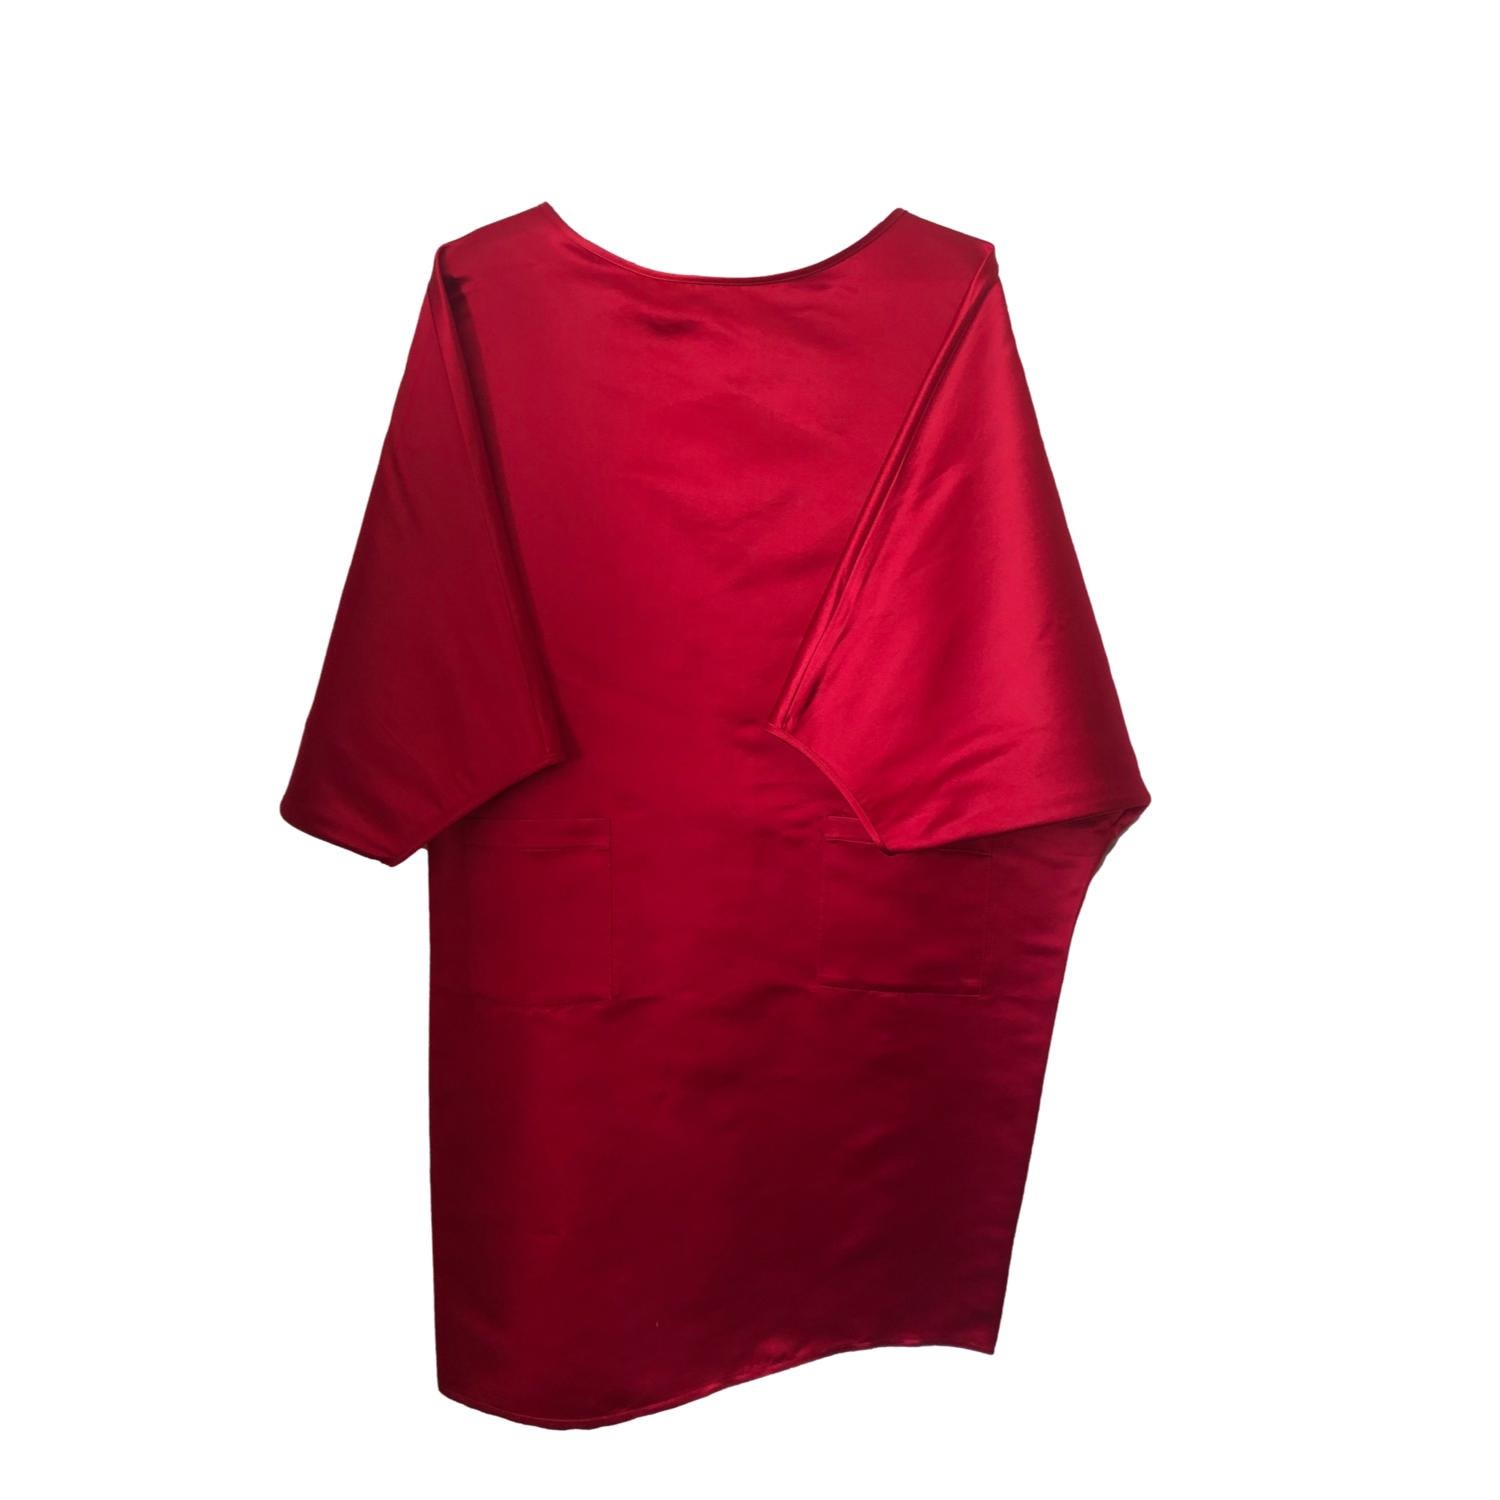 Women’s Red Satin Party Dress Small Monica Mahoney